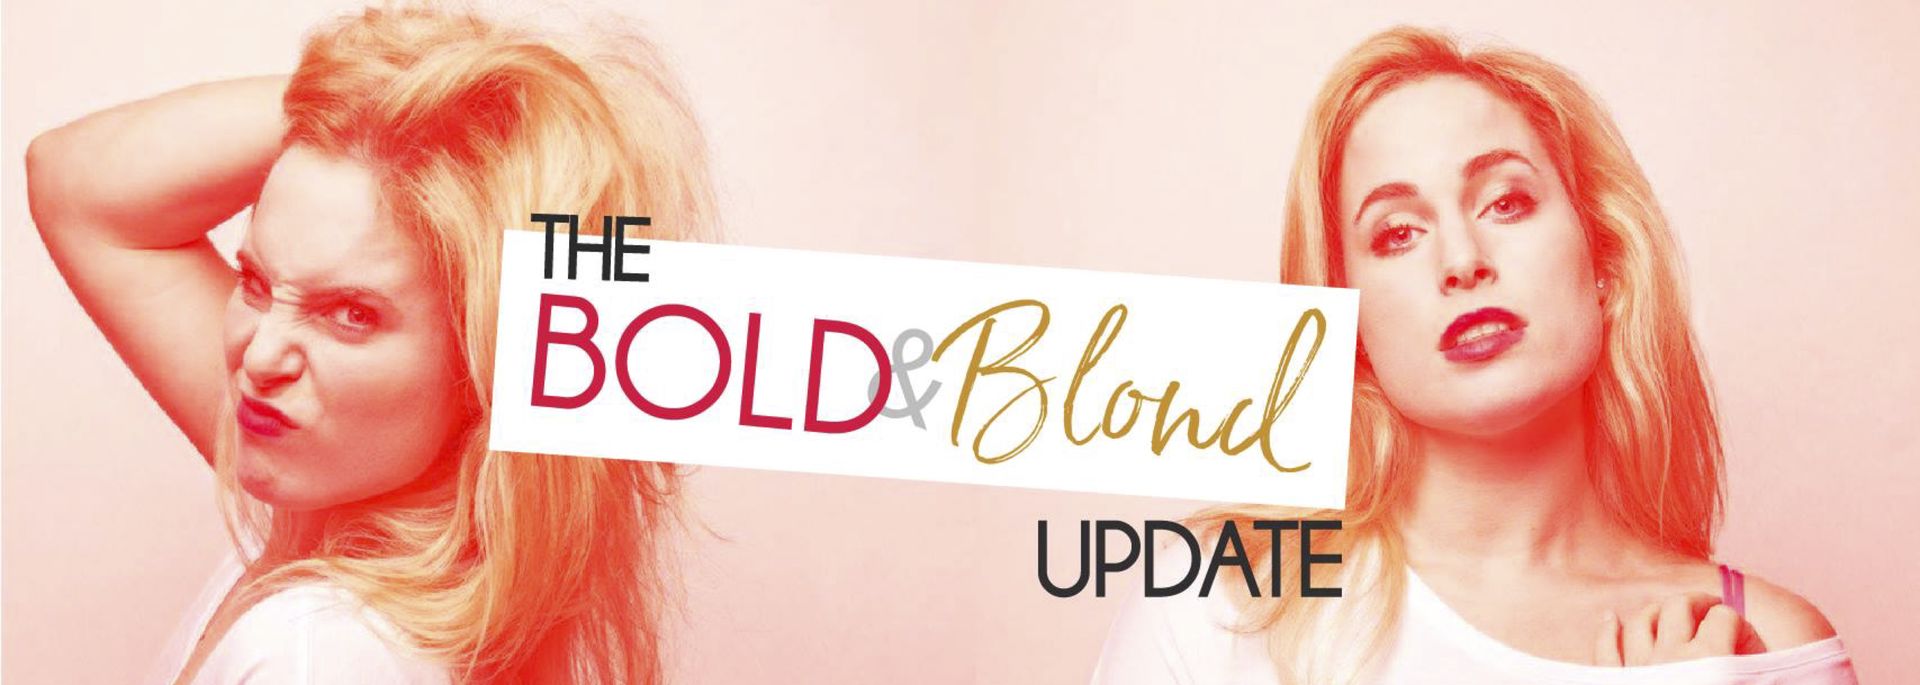 The Bold & Blond Update with Jordan Elizabeth Gelber